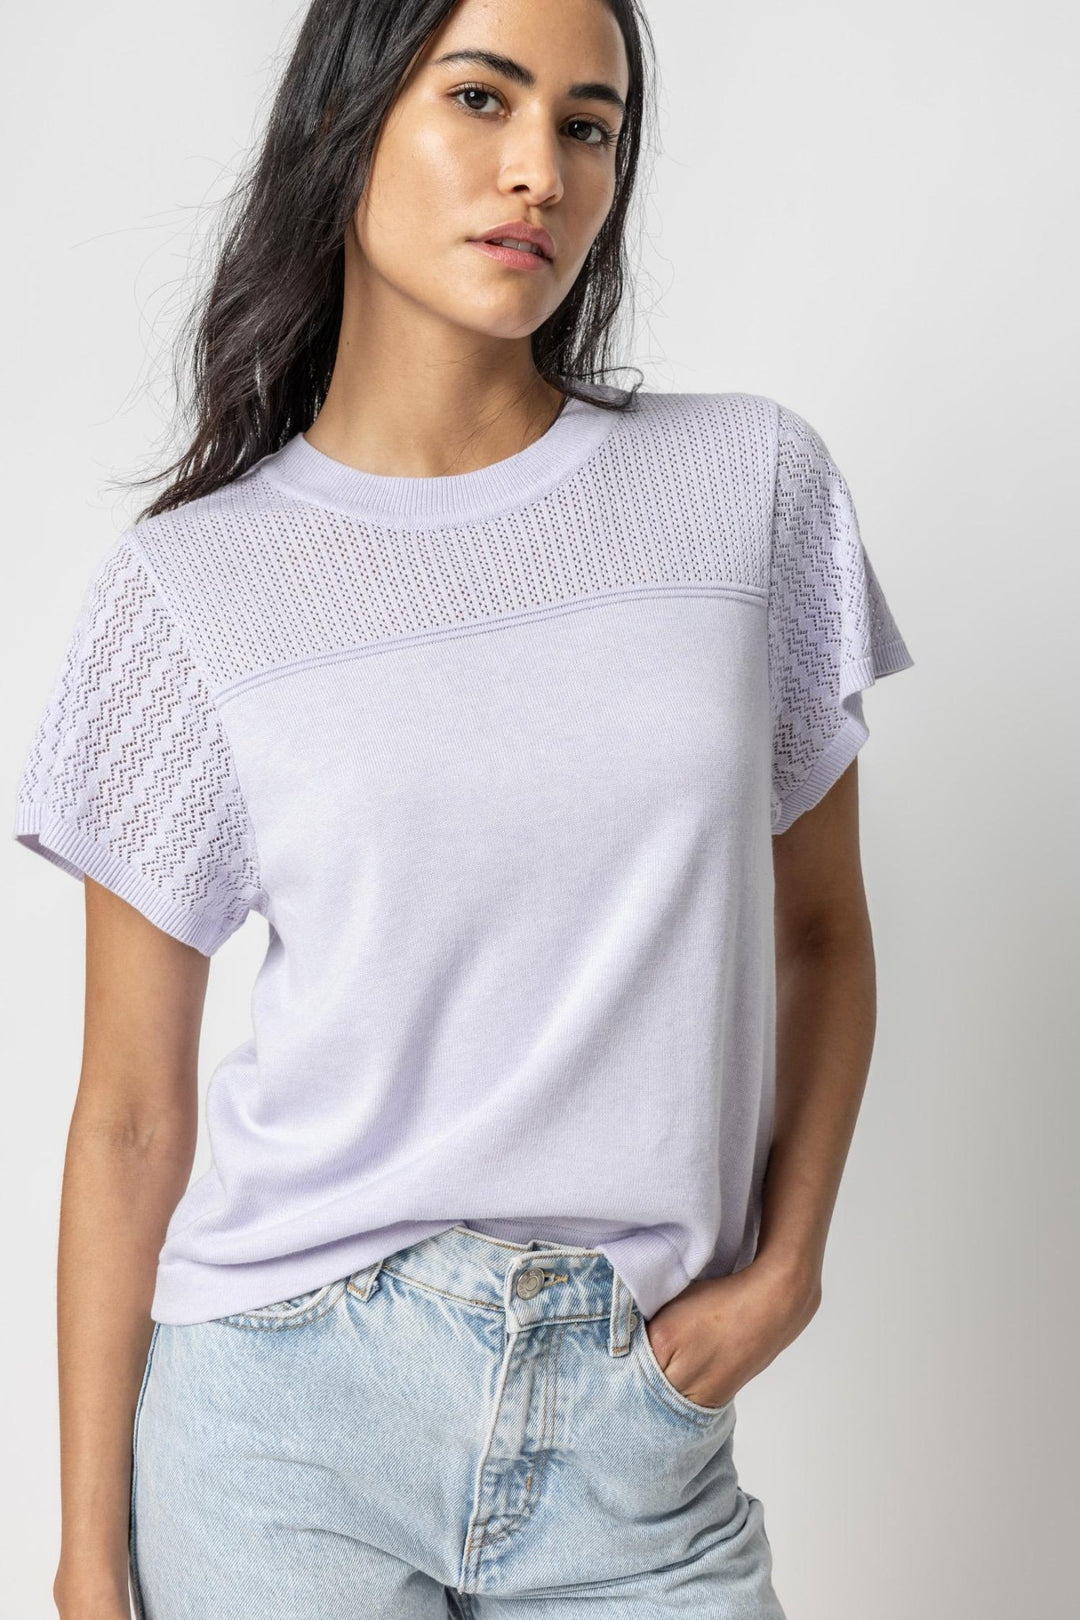 Lilla P - Pointelle Crewneck Sweater: Lilac - Shorely Chic Boutique